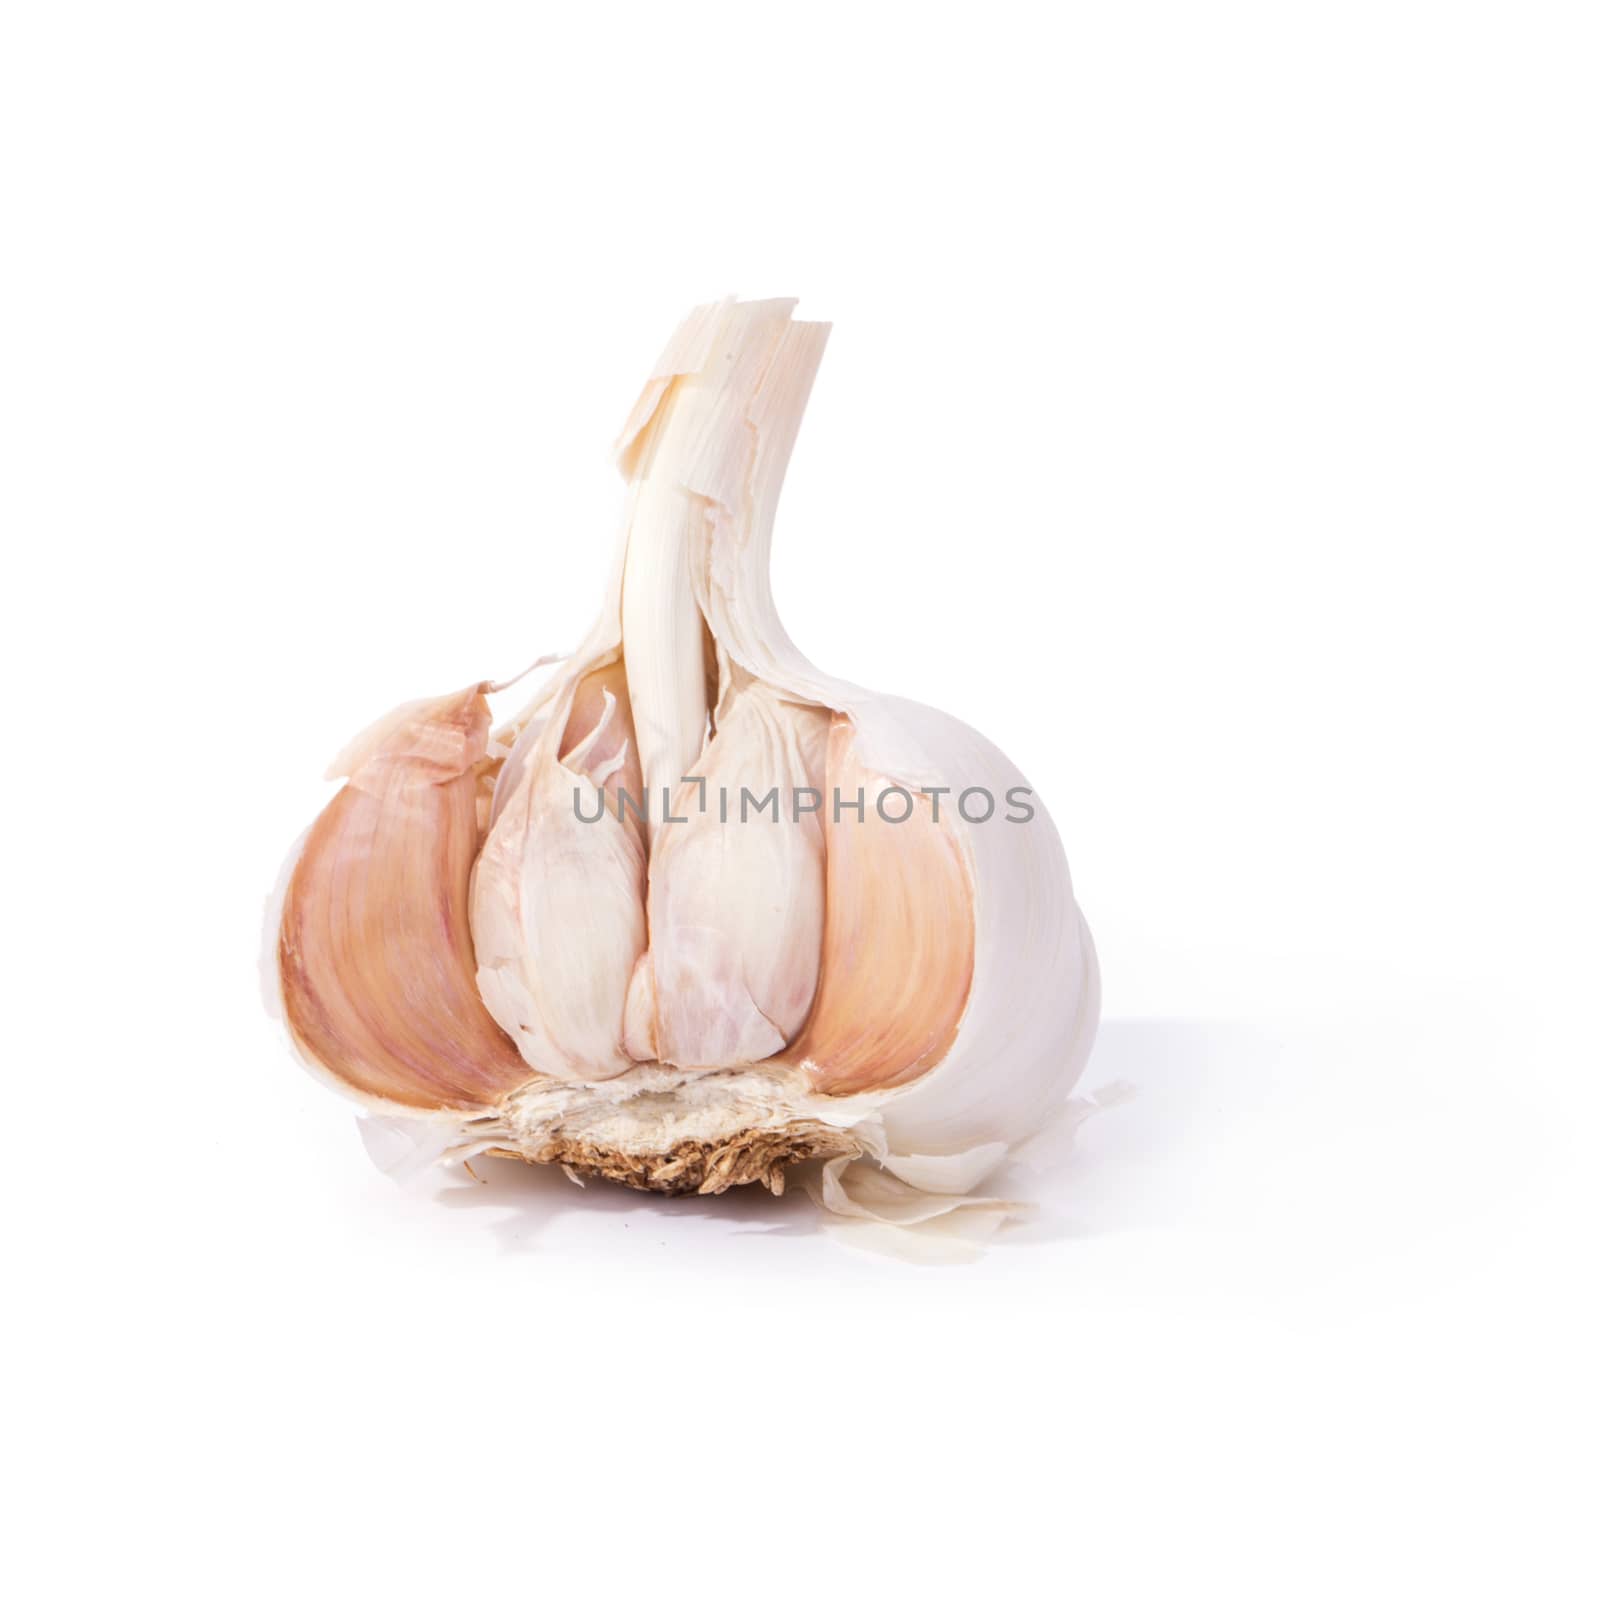 Garlic on the table by rufatjumali